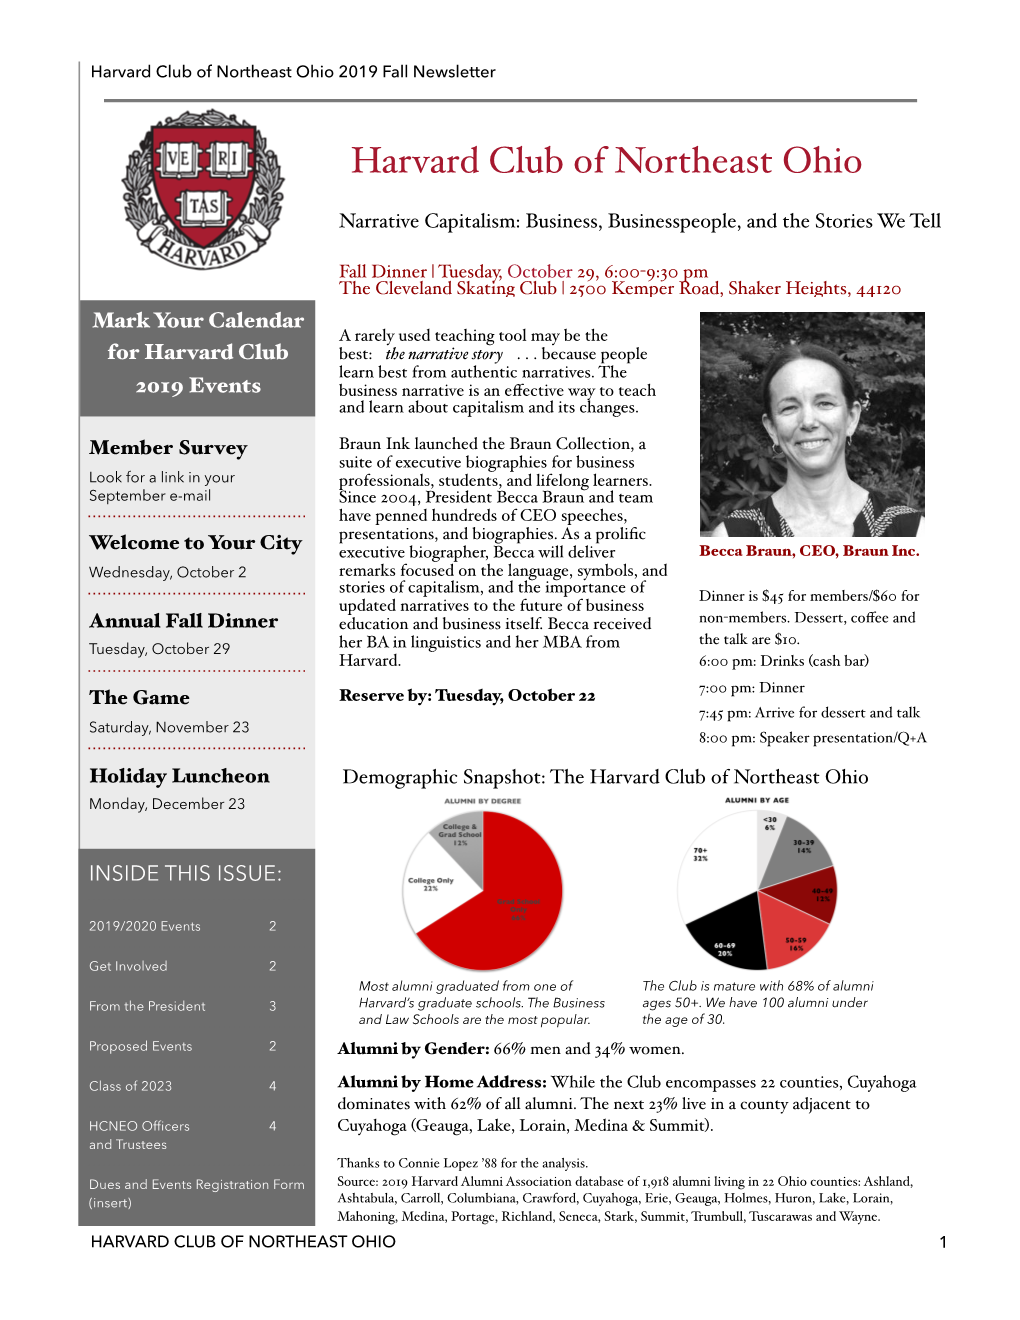 The Harvard Class of 2023